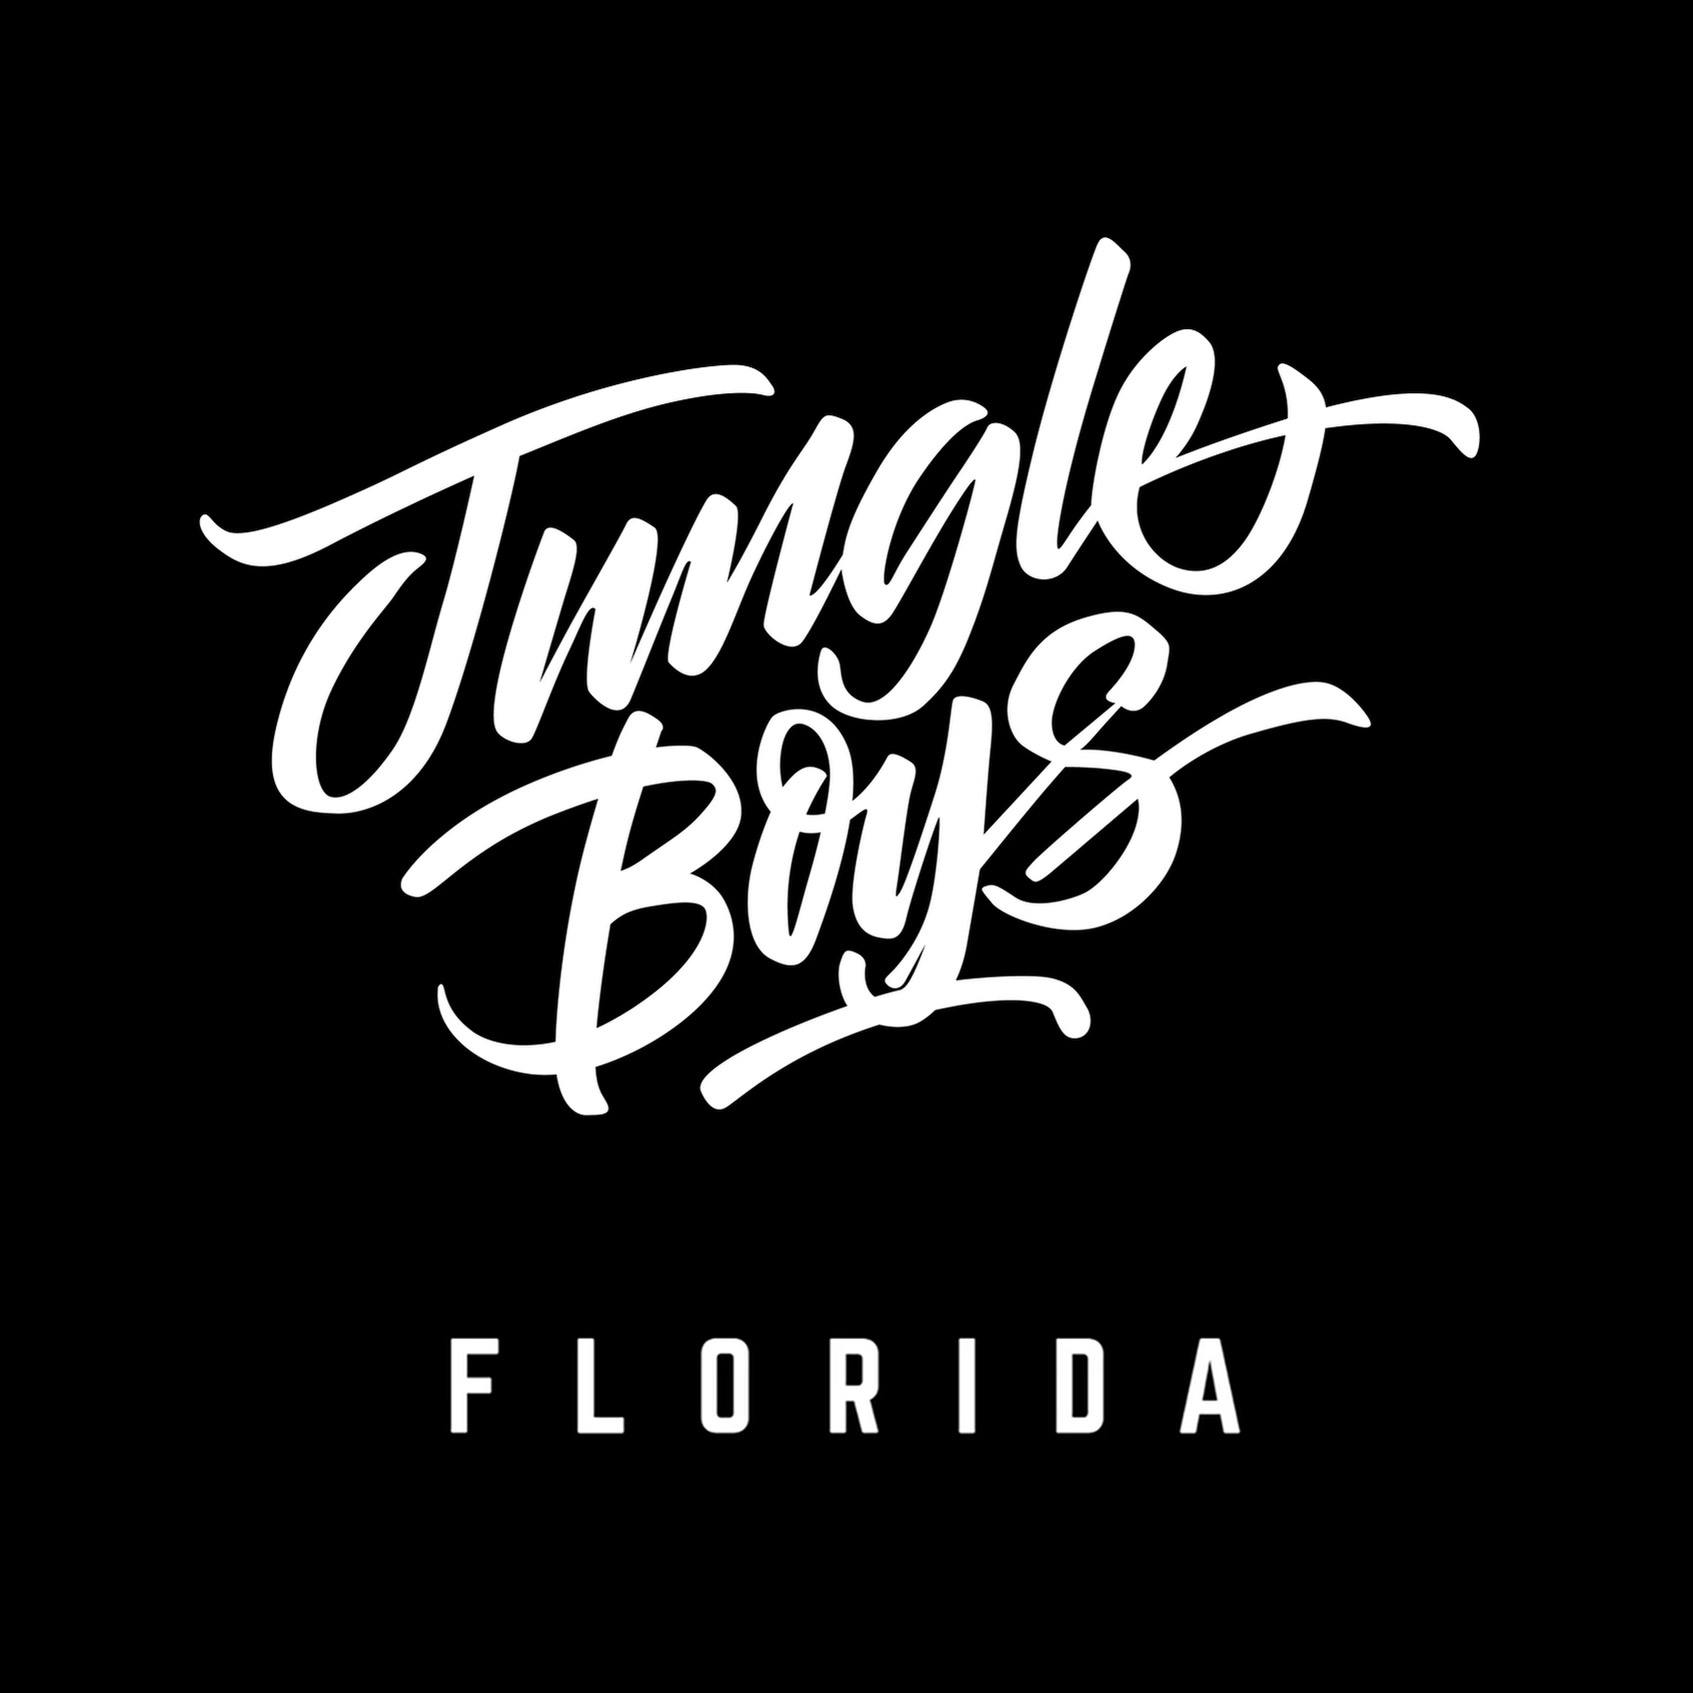 Jungle Boys Miami Beach logo